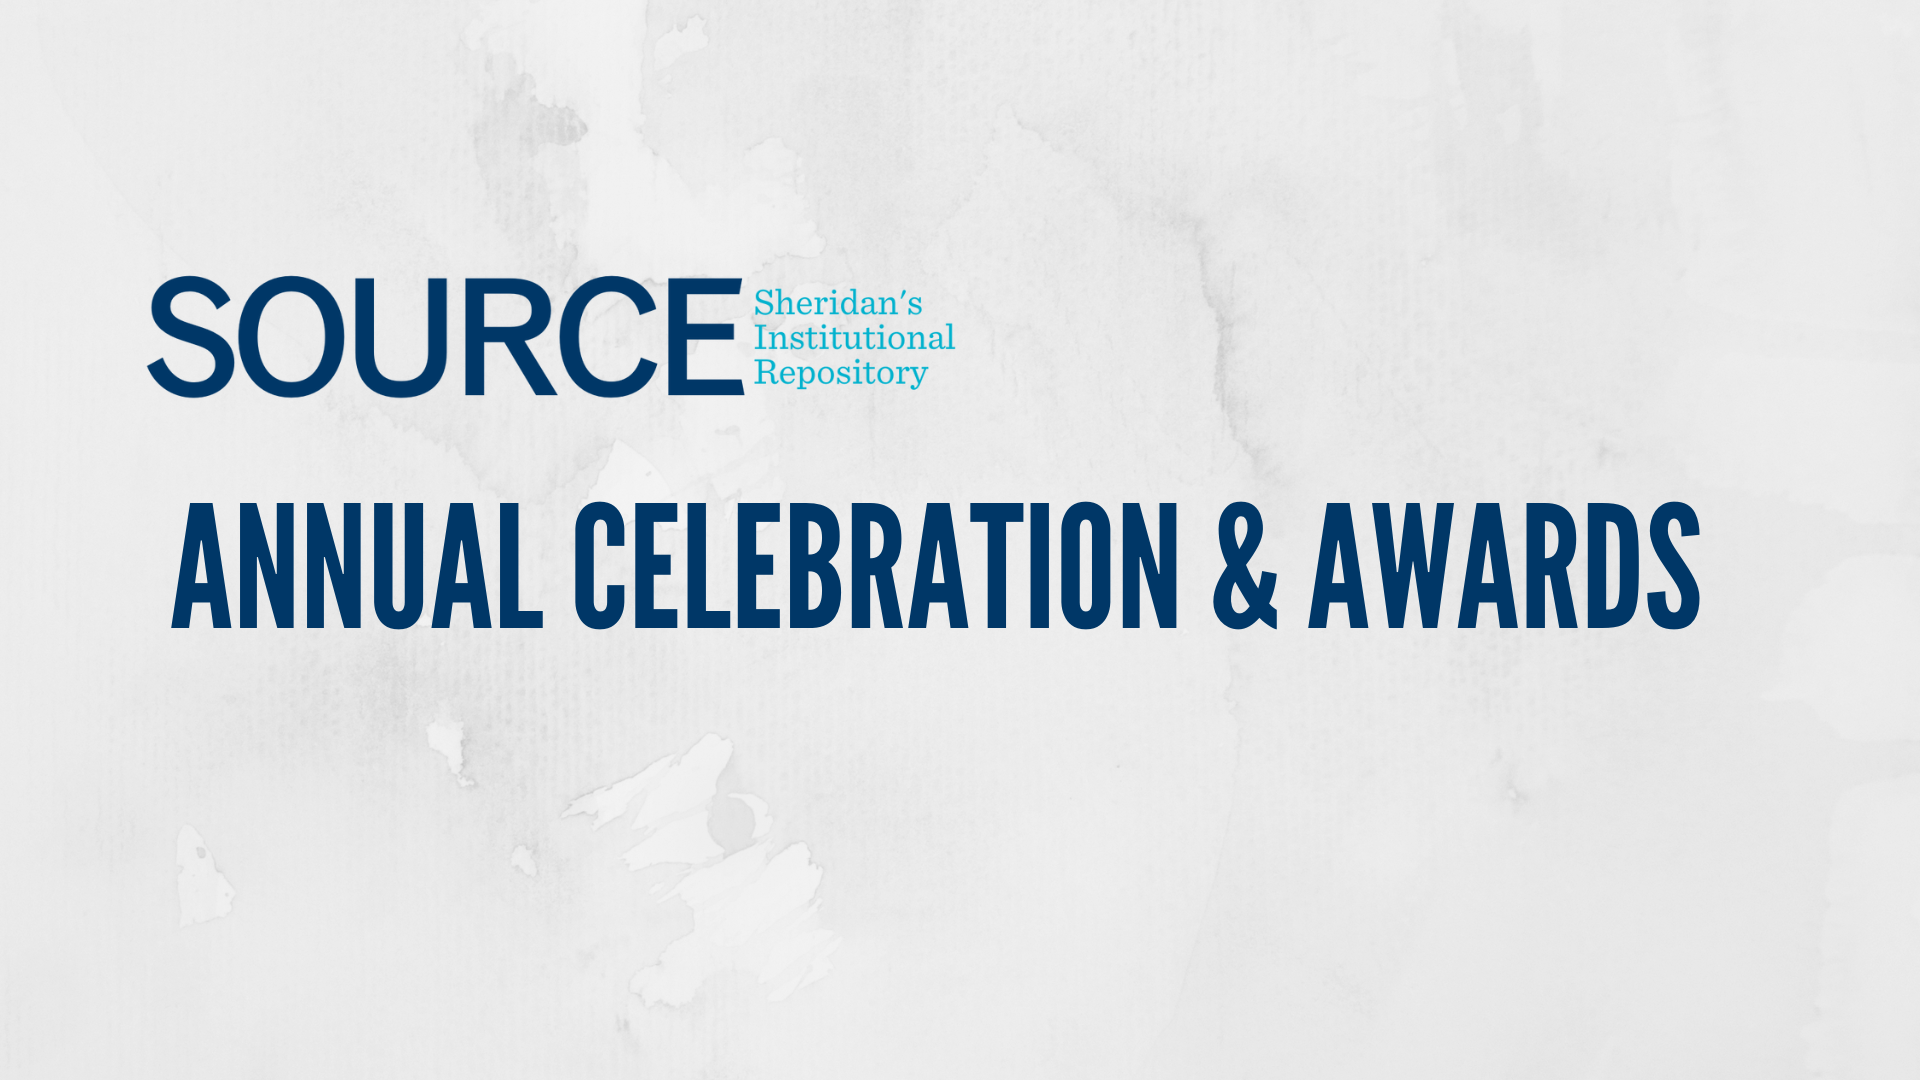 SOURCE Annual Celebration & Awards